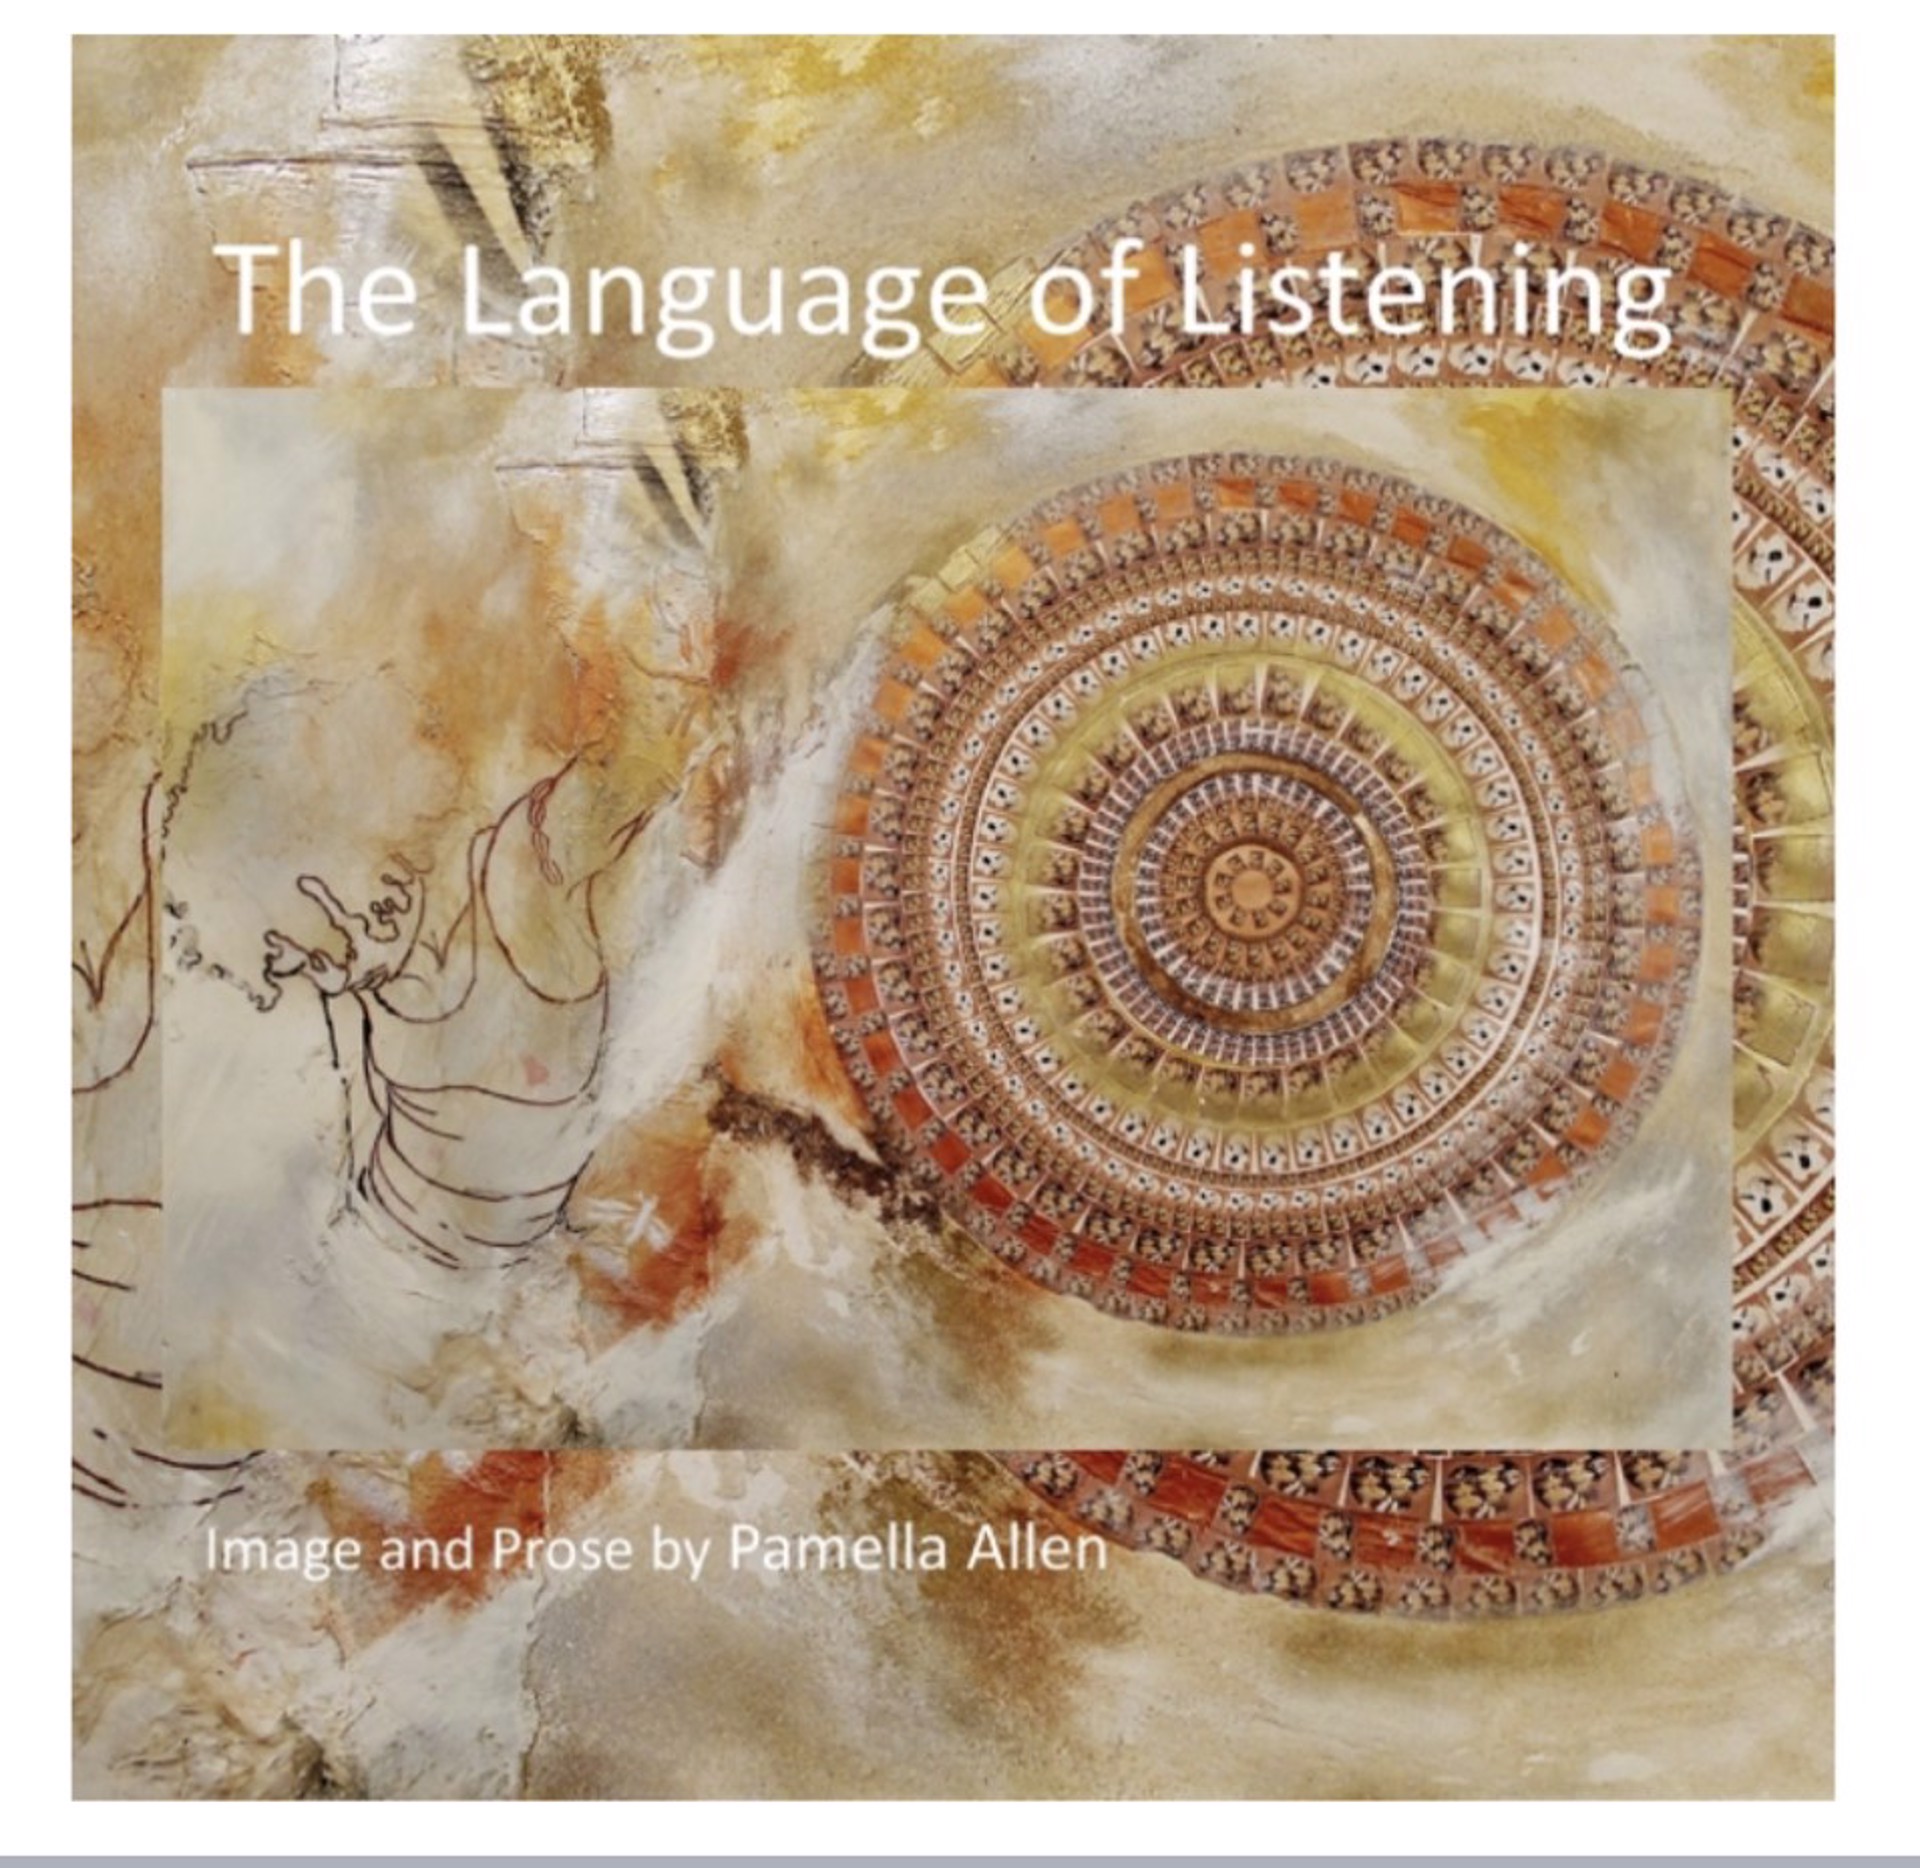 "The language of Listening" by Pamella Allen